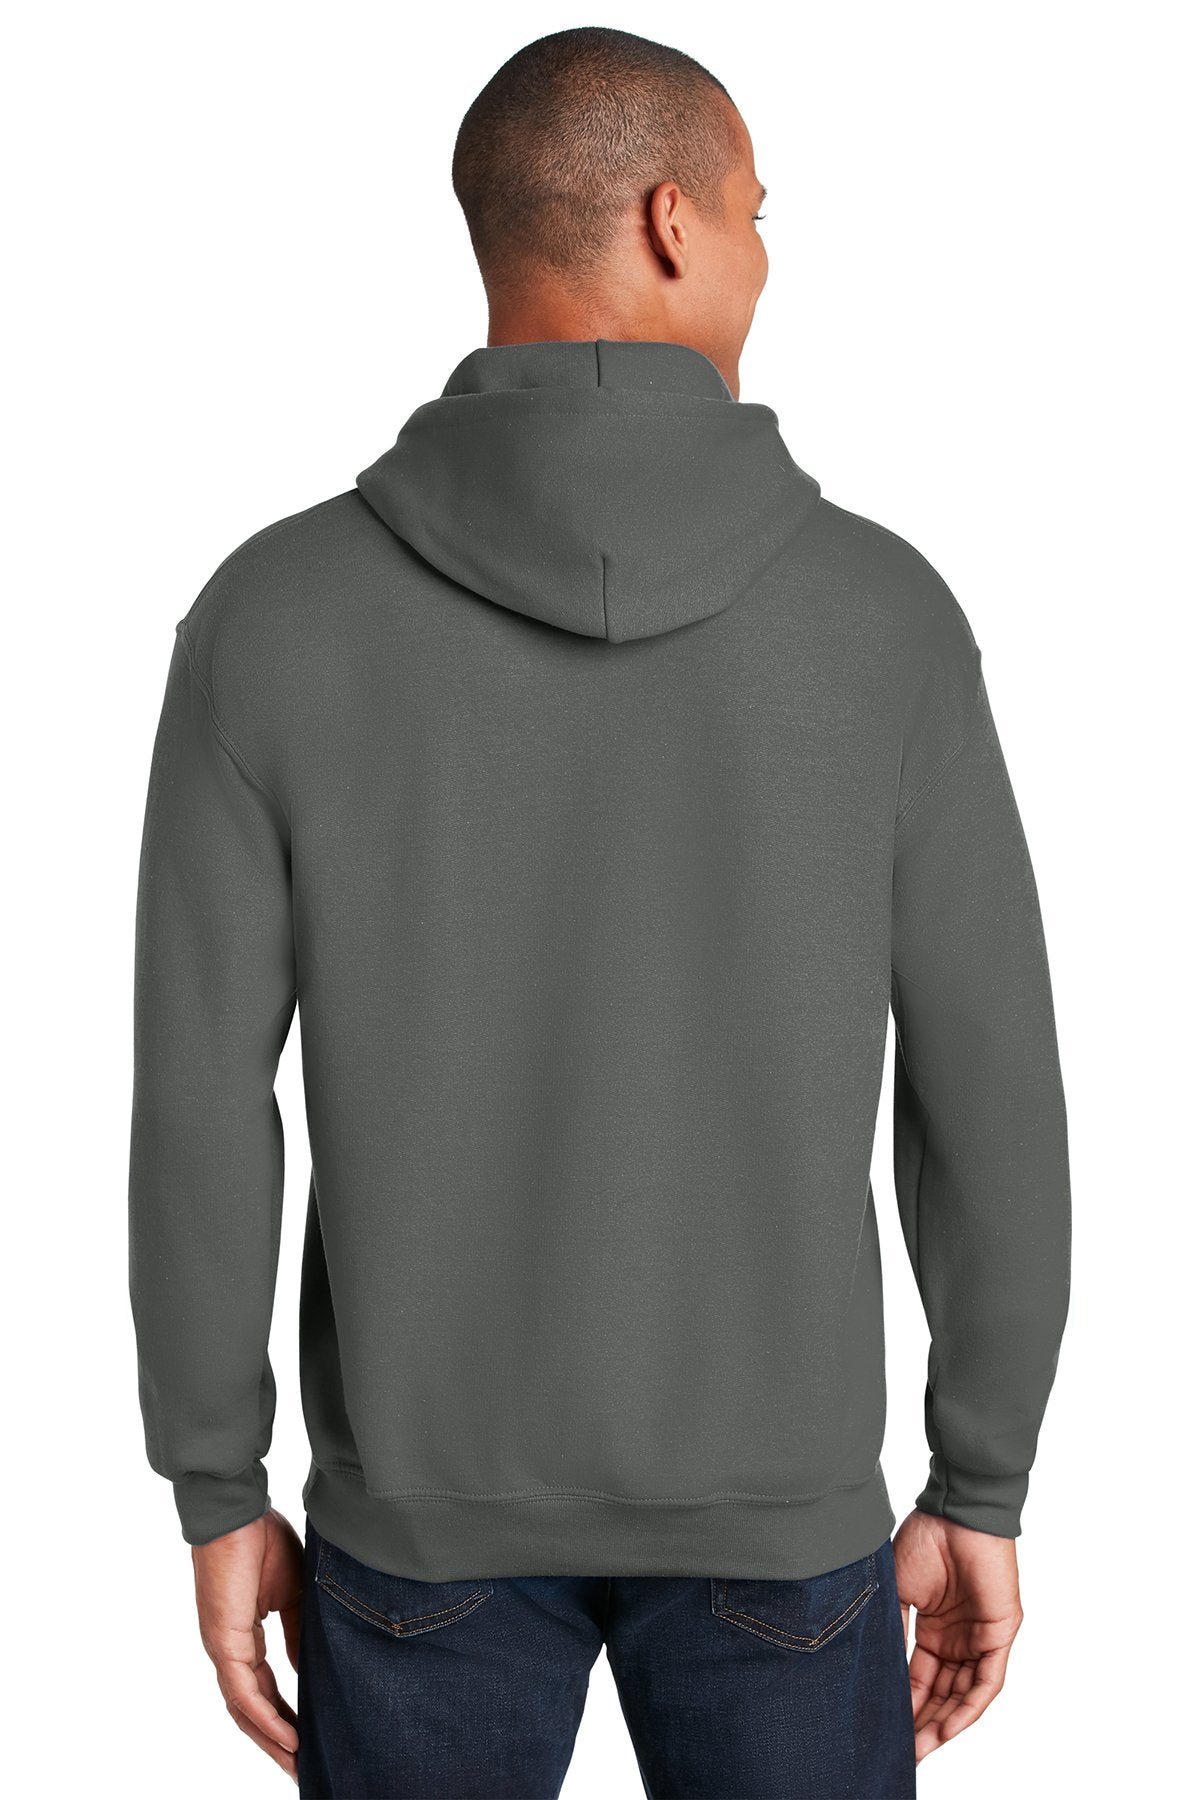 Gildan Heavy Blend Hooded Sweatshirt Charcoal